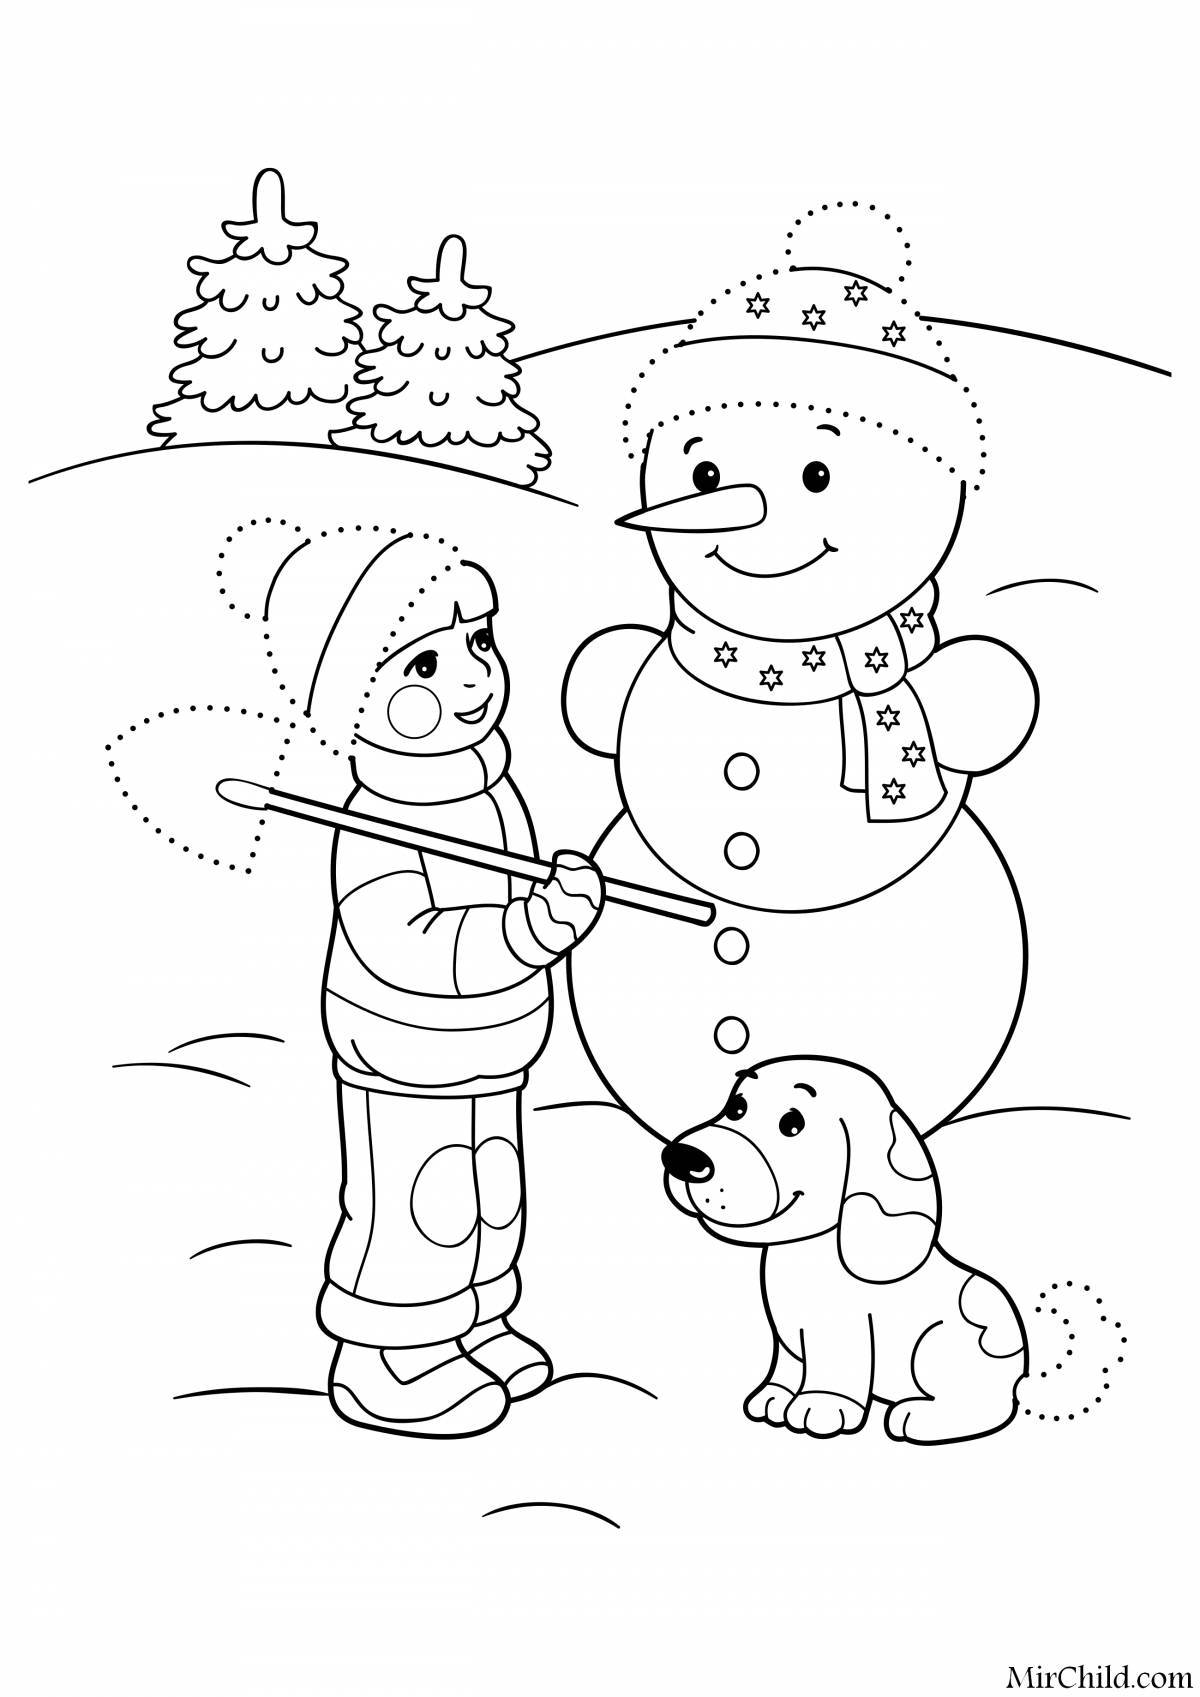 Joyful coloring for children winter fun 5-6 years